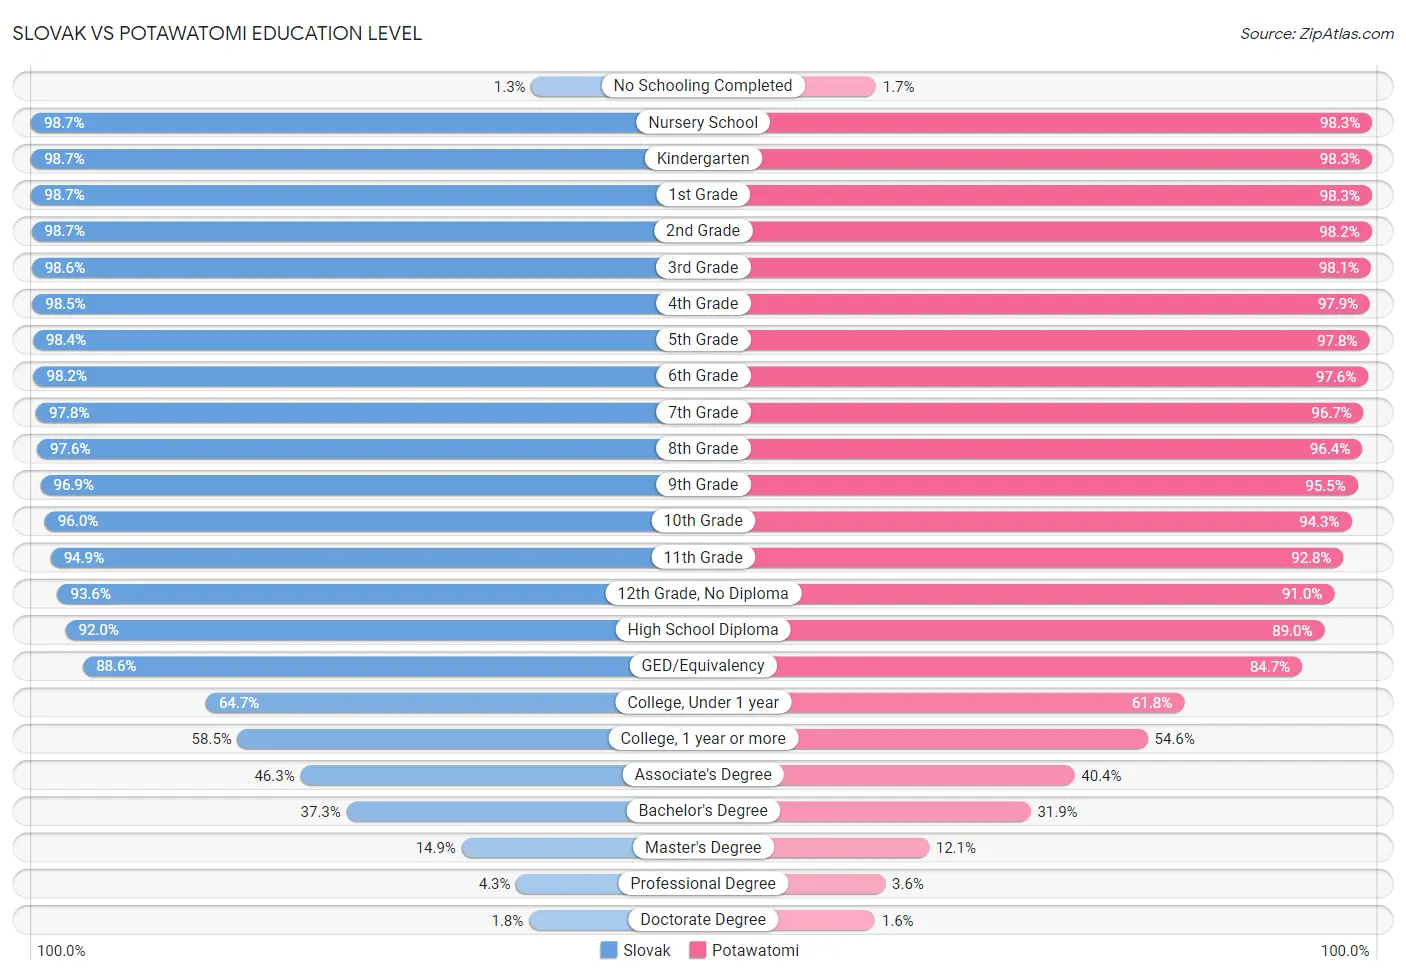 Slovak vs Potawatomi Education Level